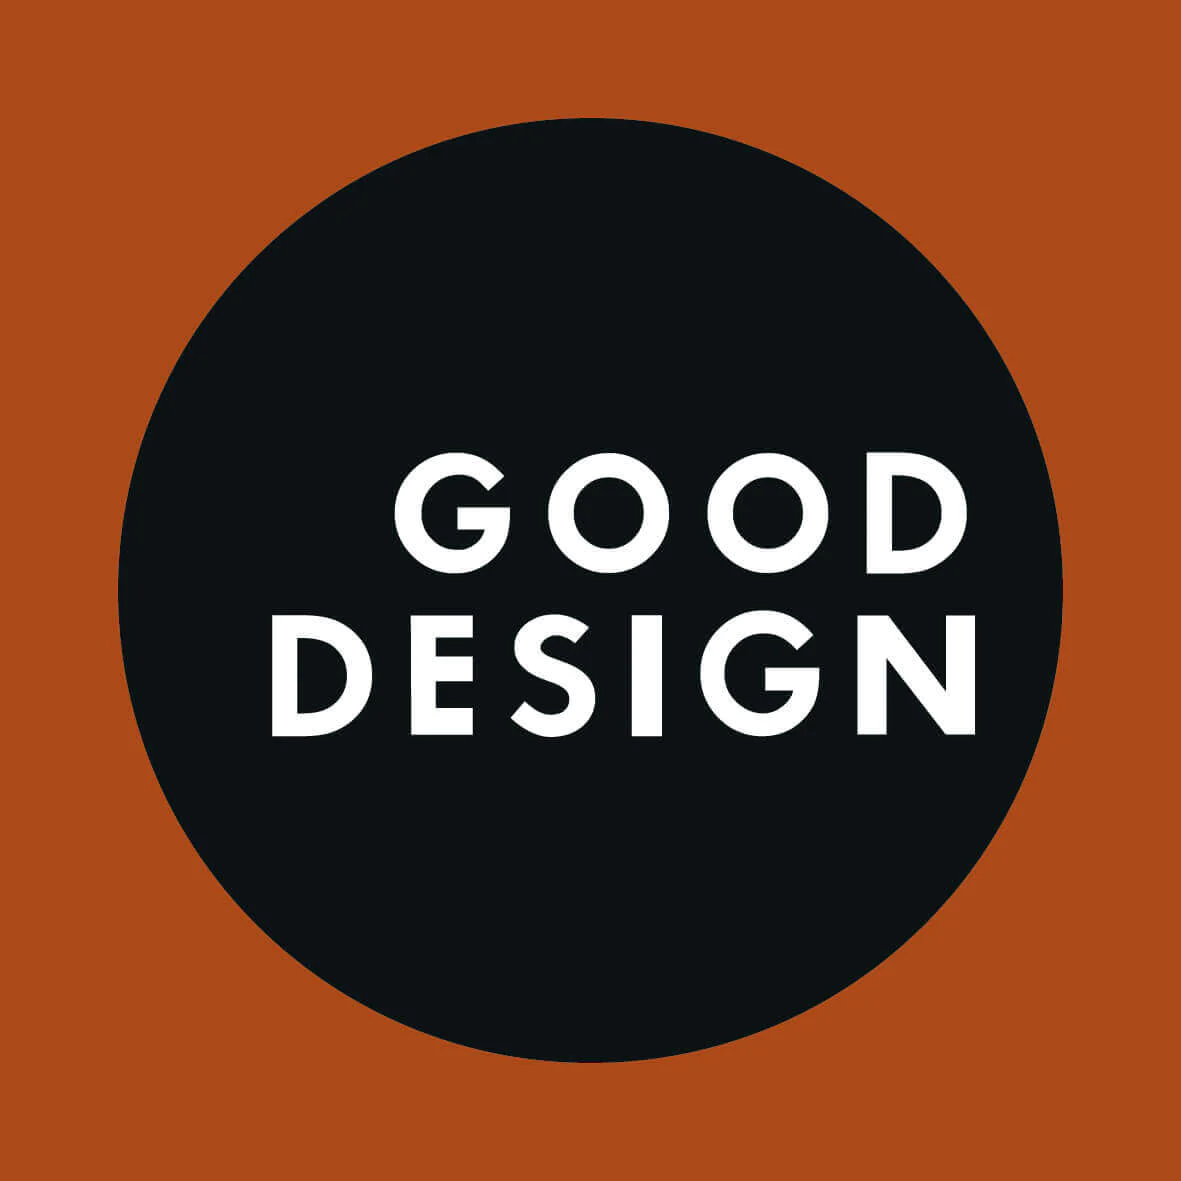 Cena za dobrý design® 2021